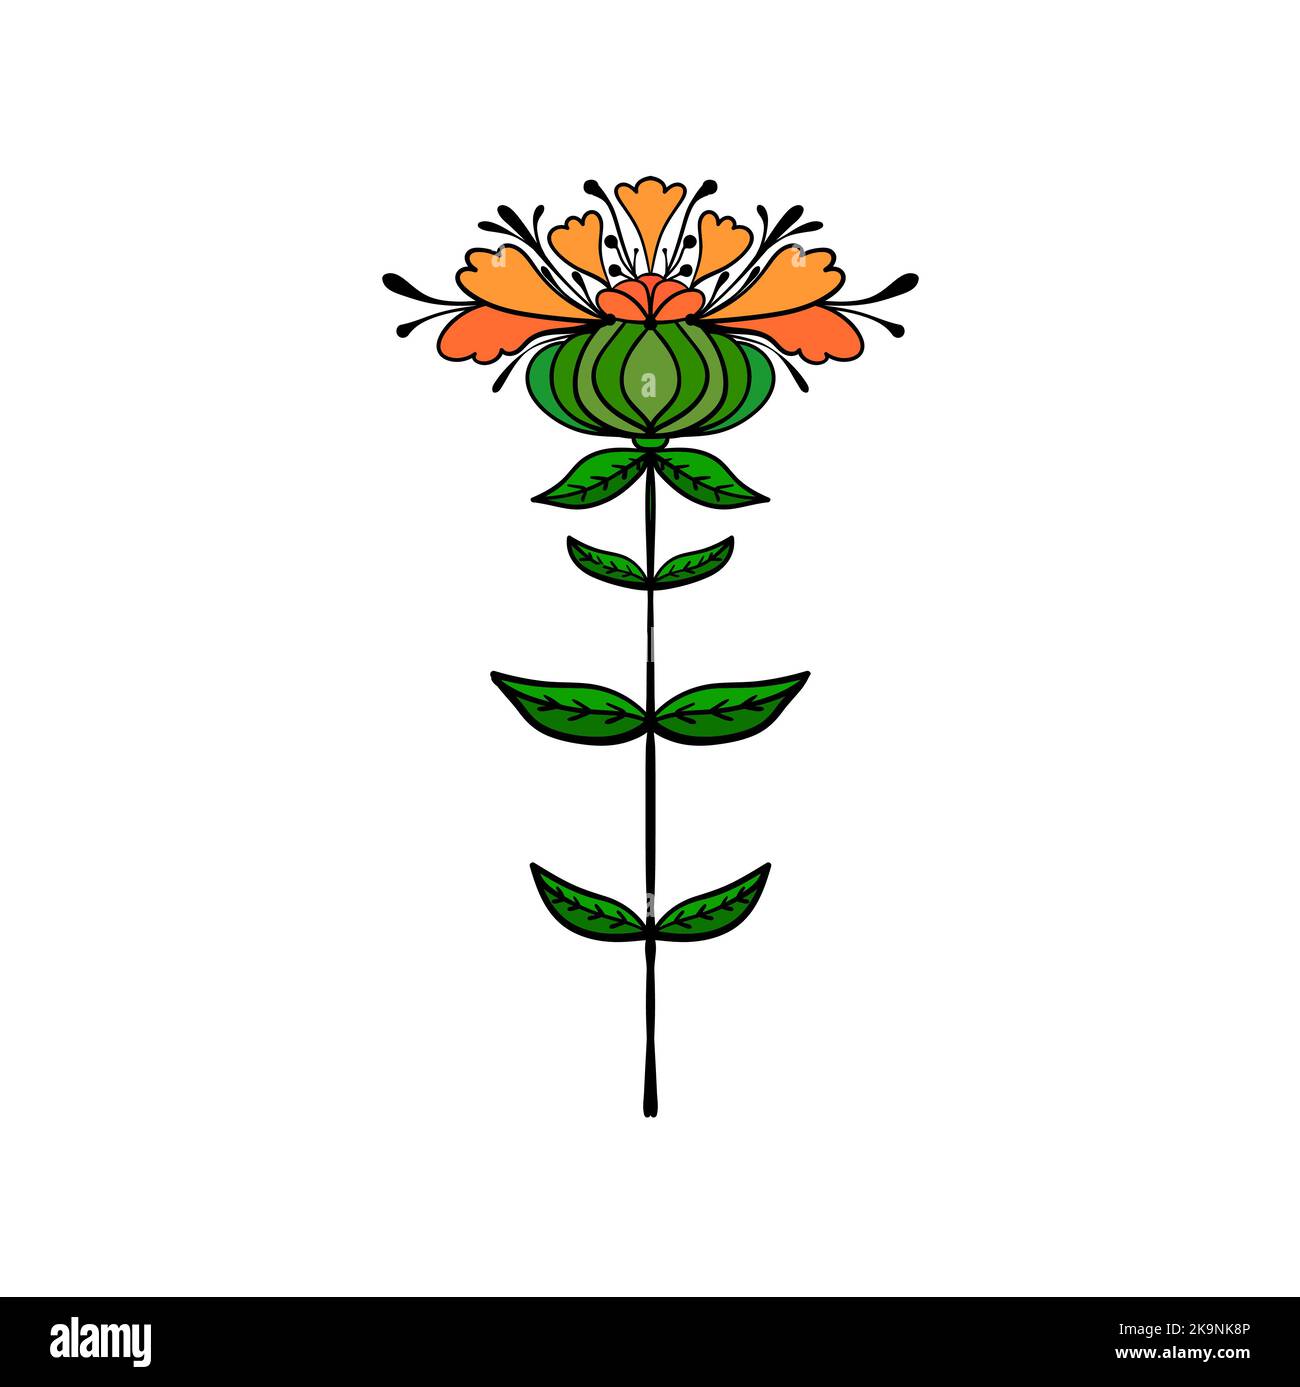 Symmetrical flower in ethnic style. Summer, spting decorative floral element for cards, poster, scrapbook, textile design Stock Vector